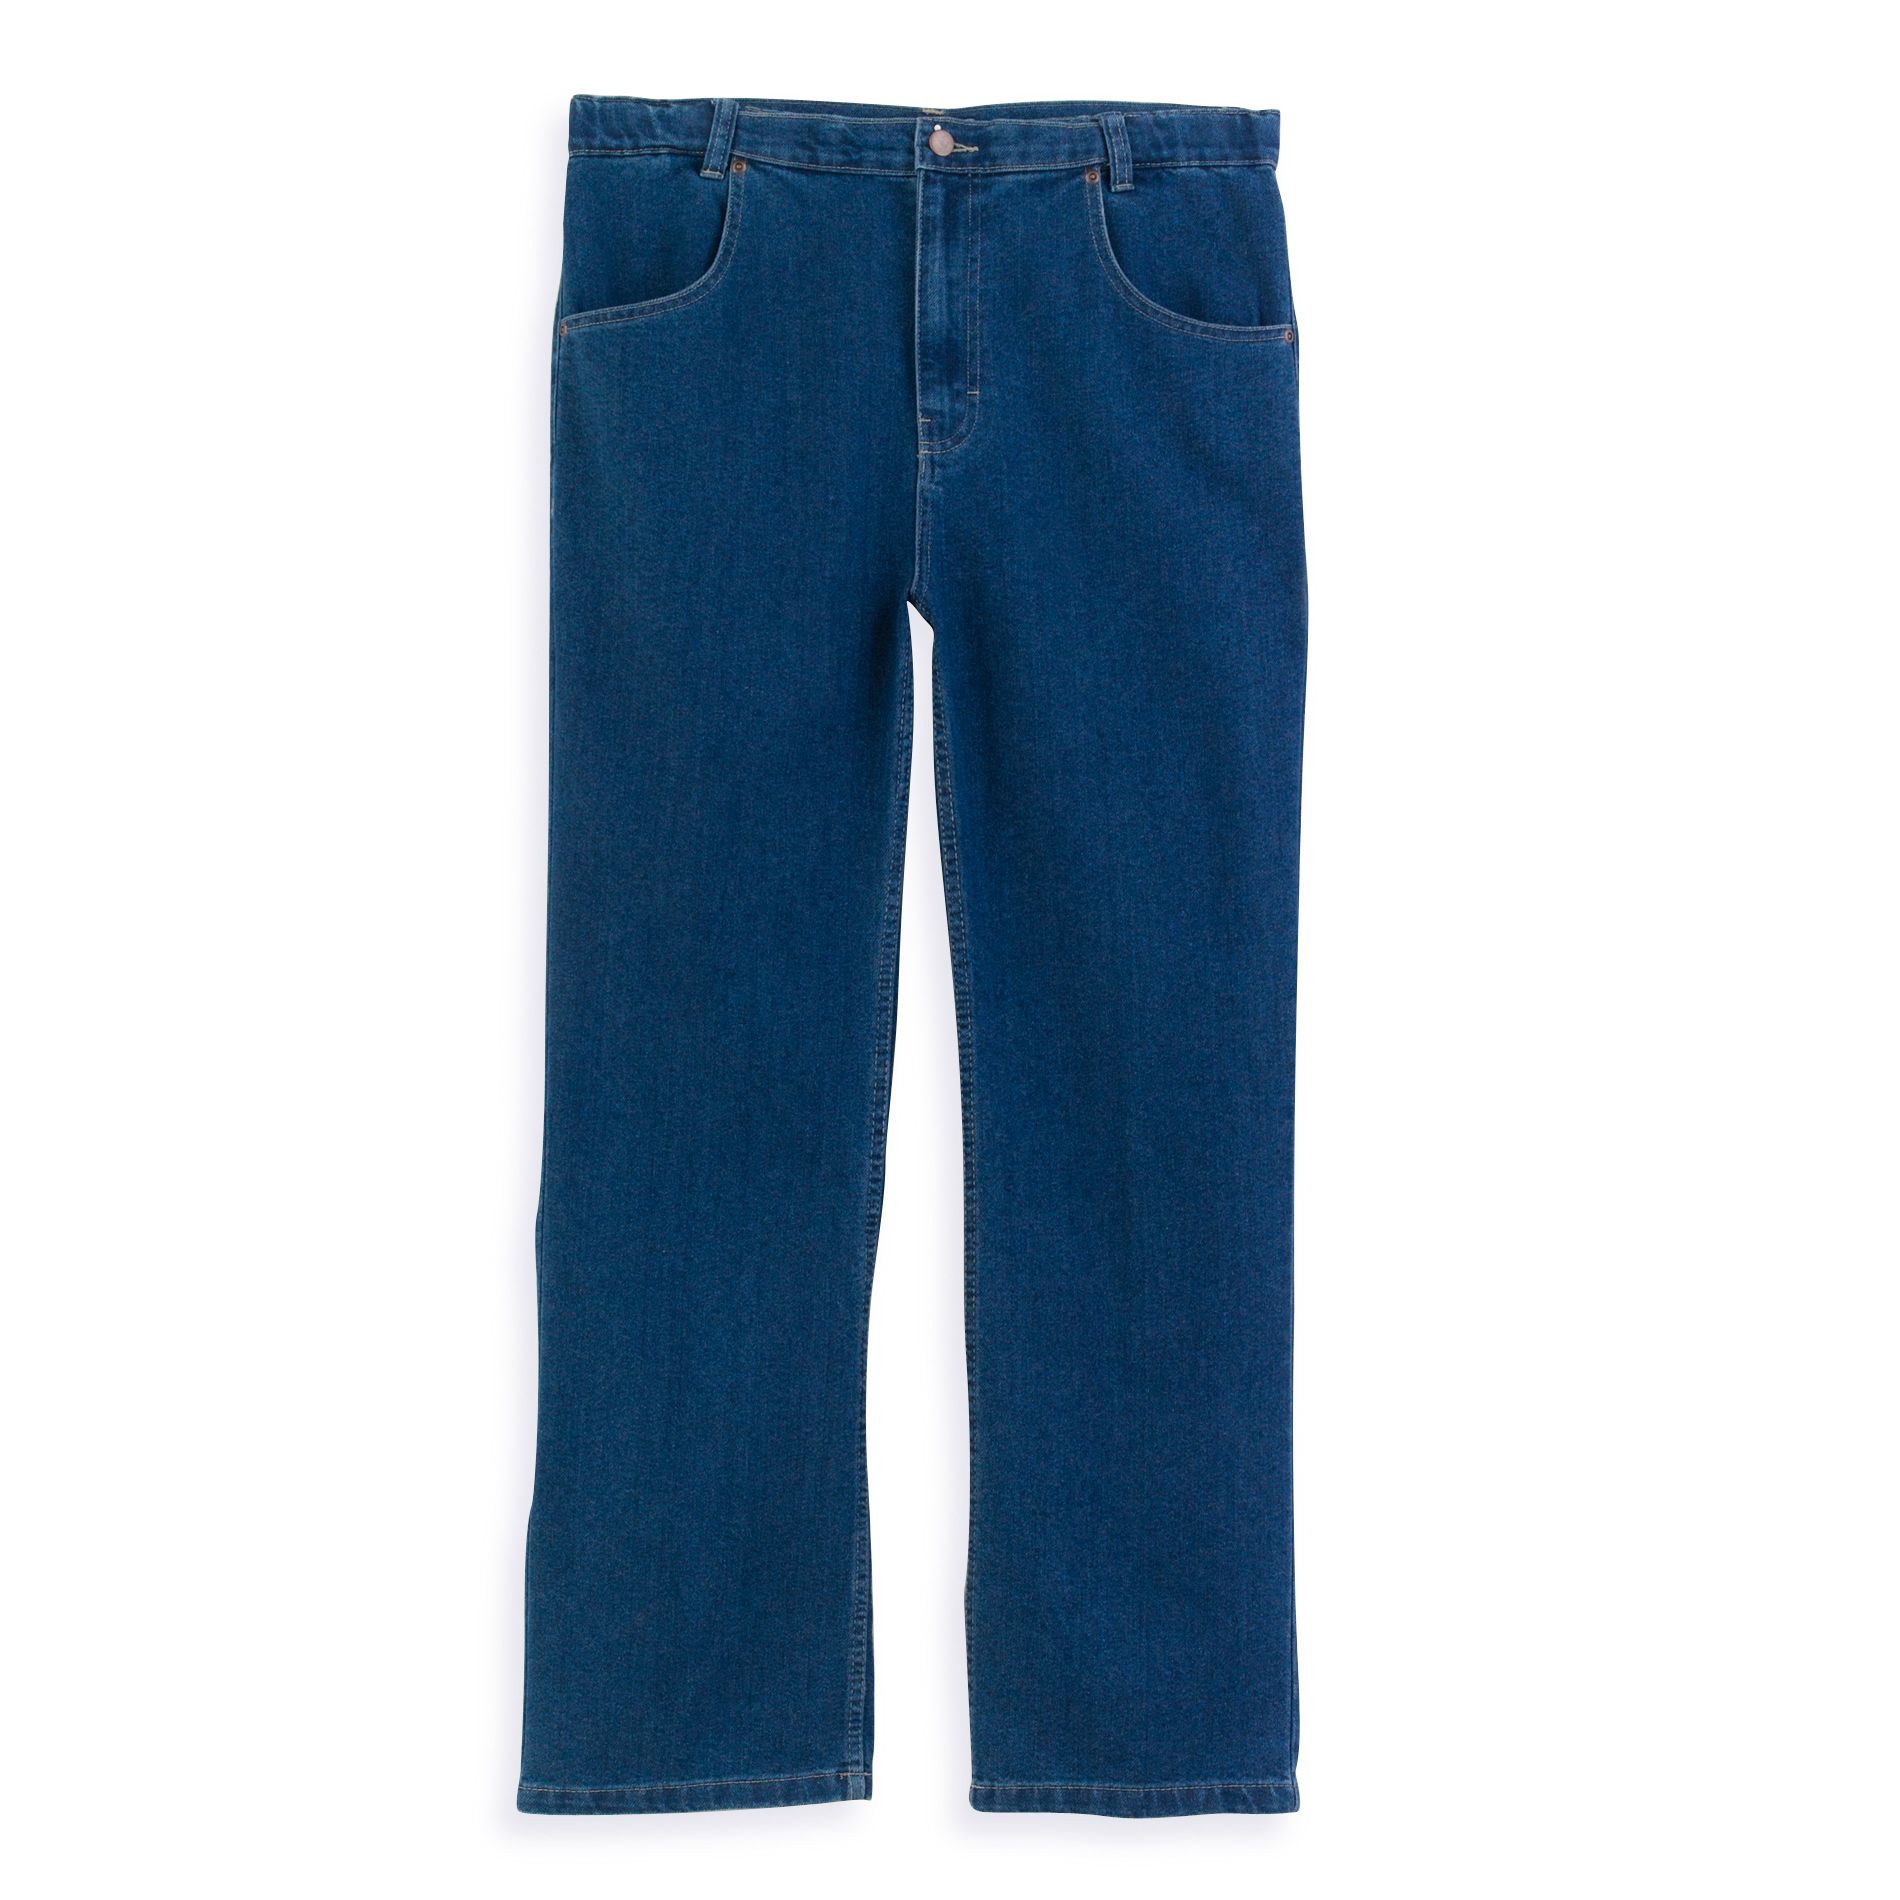 David Taylor Collection Men's Comfort FlexJeans | Shop Your Way: Online ...